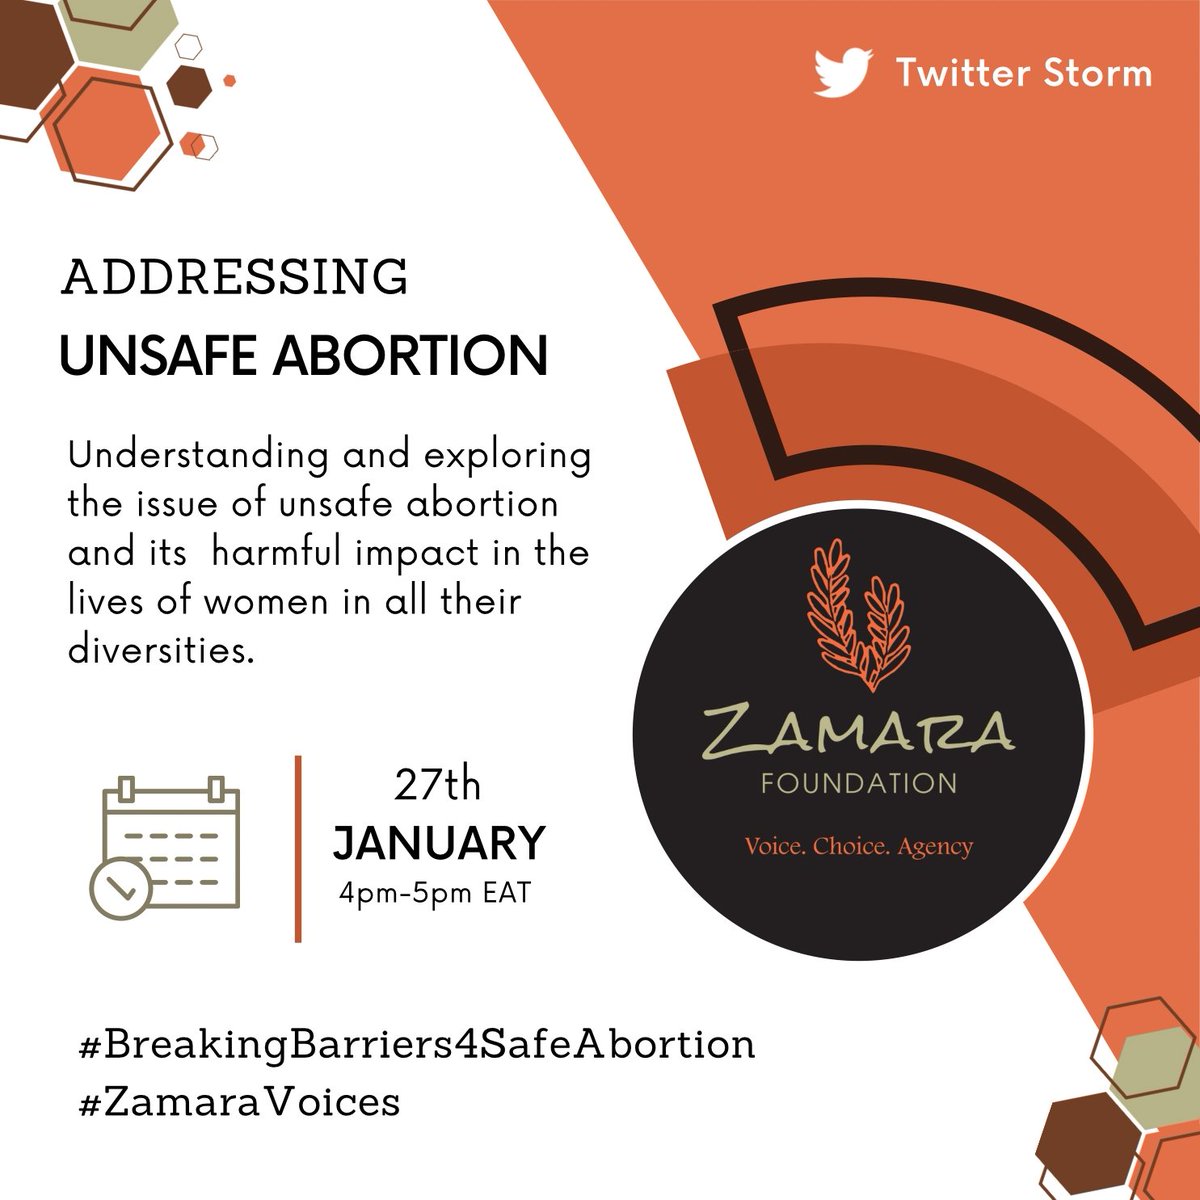 Let's adress the issue of unsafe abortion and the negative impacts. Join this conversation from 4pm to 5pm.

#BreakingBarriers4SafeAbortion
#Zamaravoices

@Zamara_fdn
@rhnkorg
@MarieStopesKe
@YourAuntyJane
@NenaNaBinti
@Nimechanuka
@NAYAKenya
@KenyaSRHR